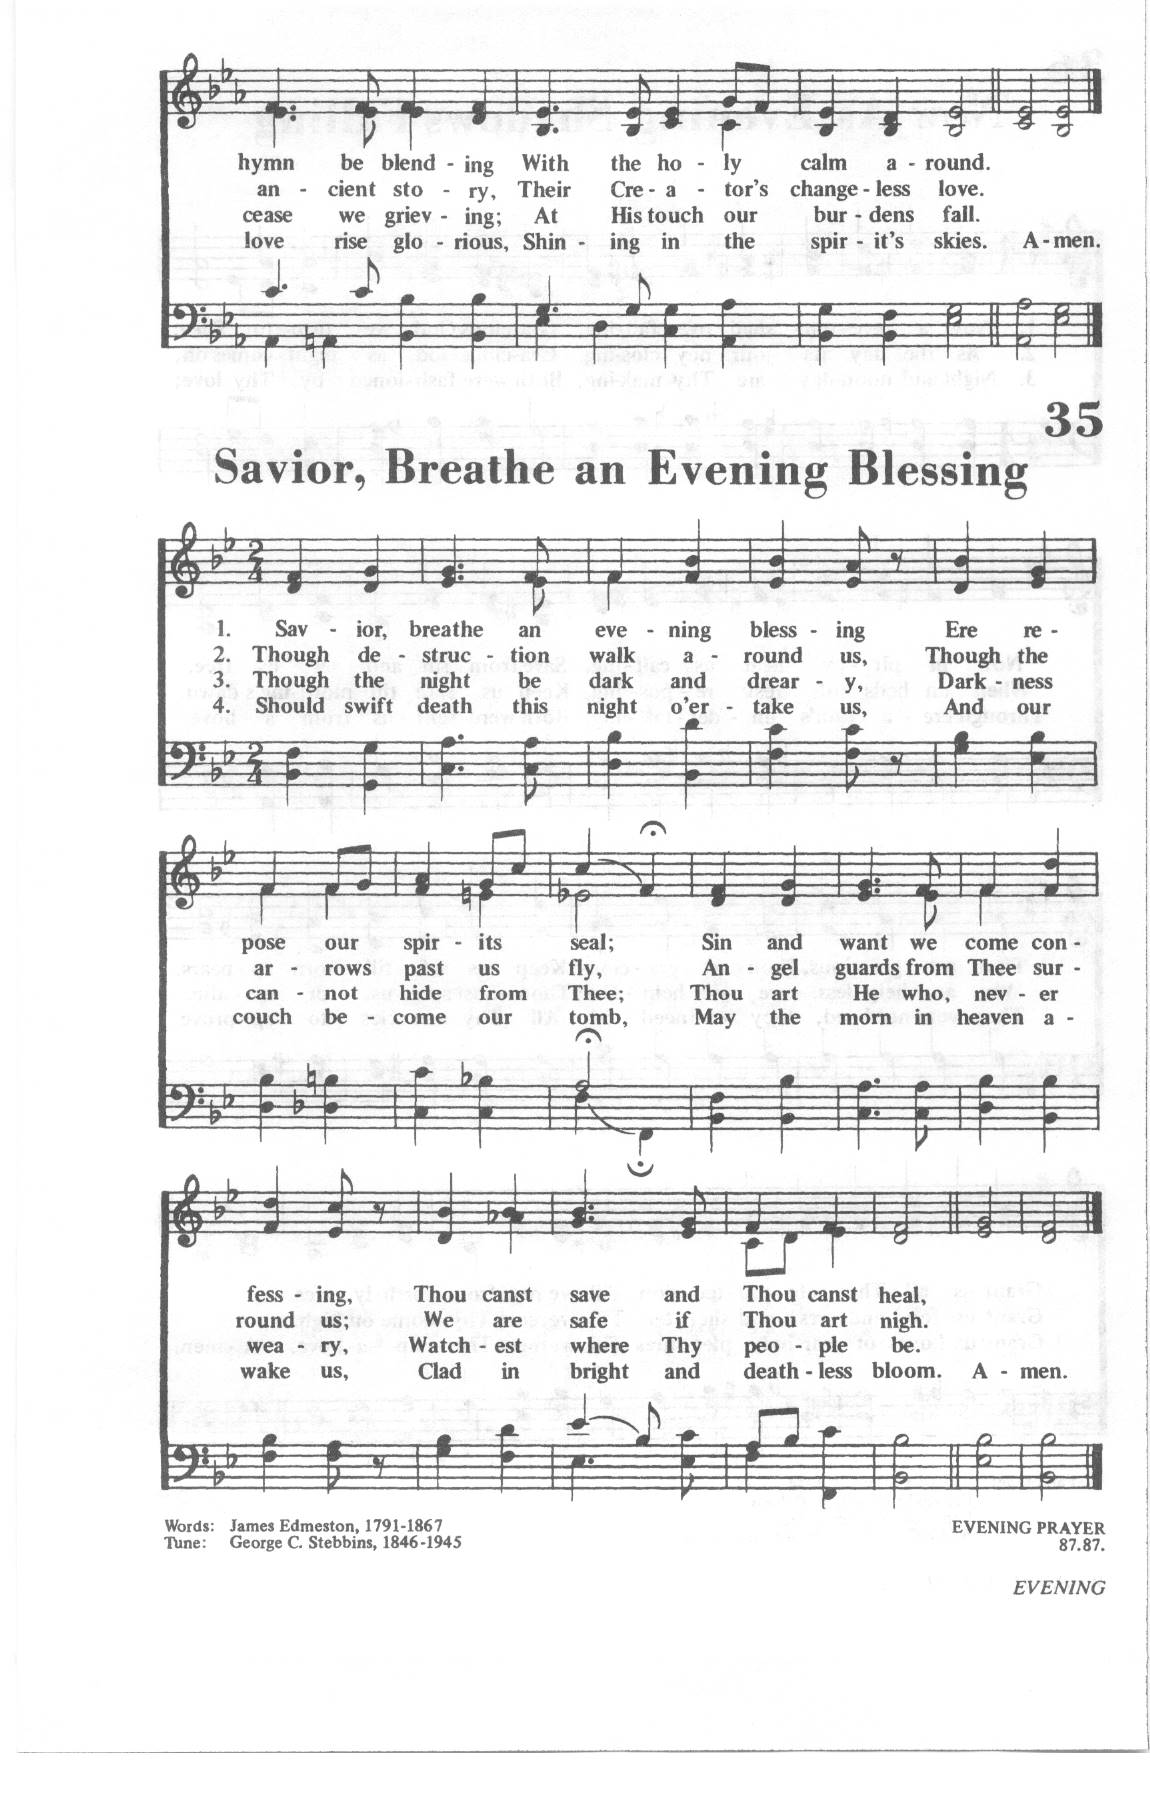 African Methodist Episcopal Church Hymnal page 37